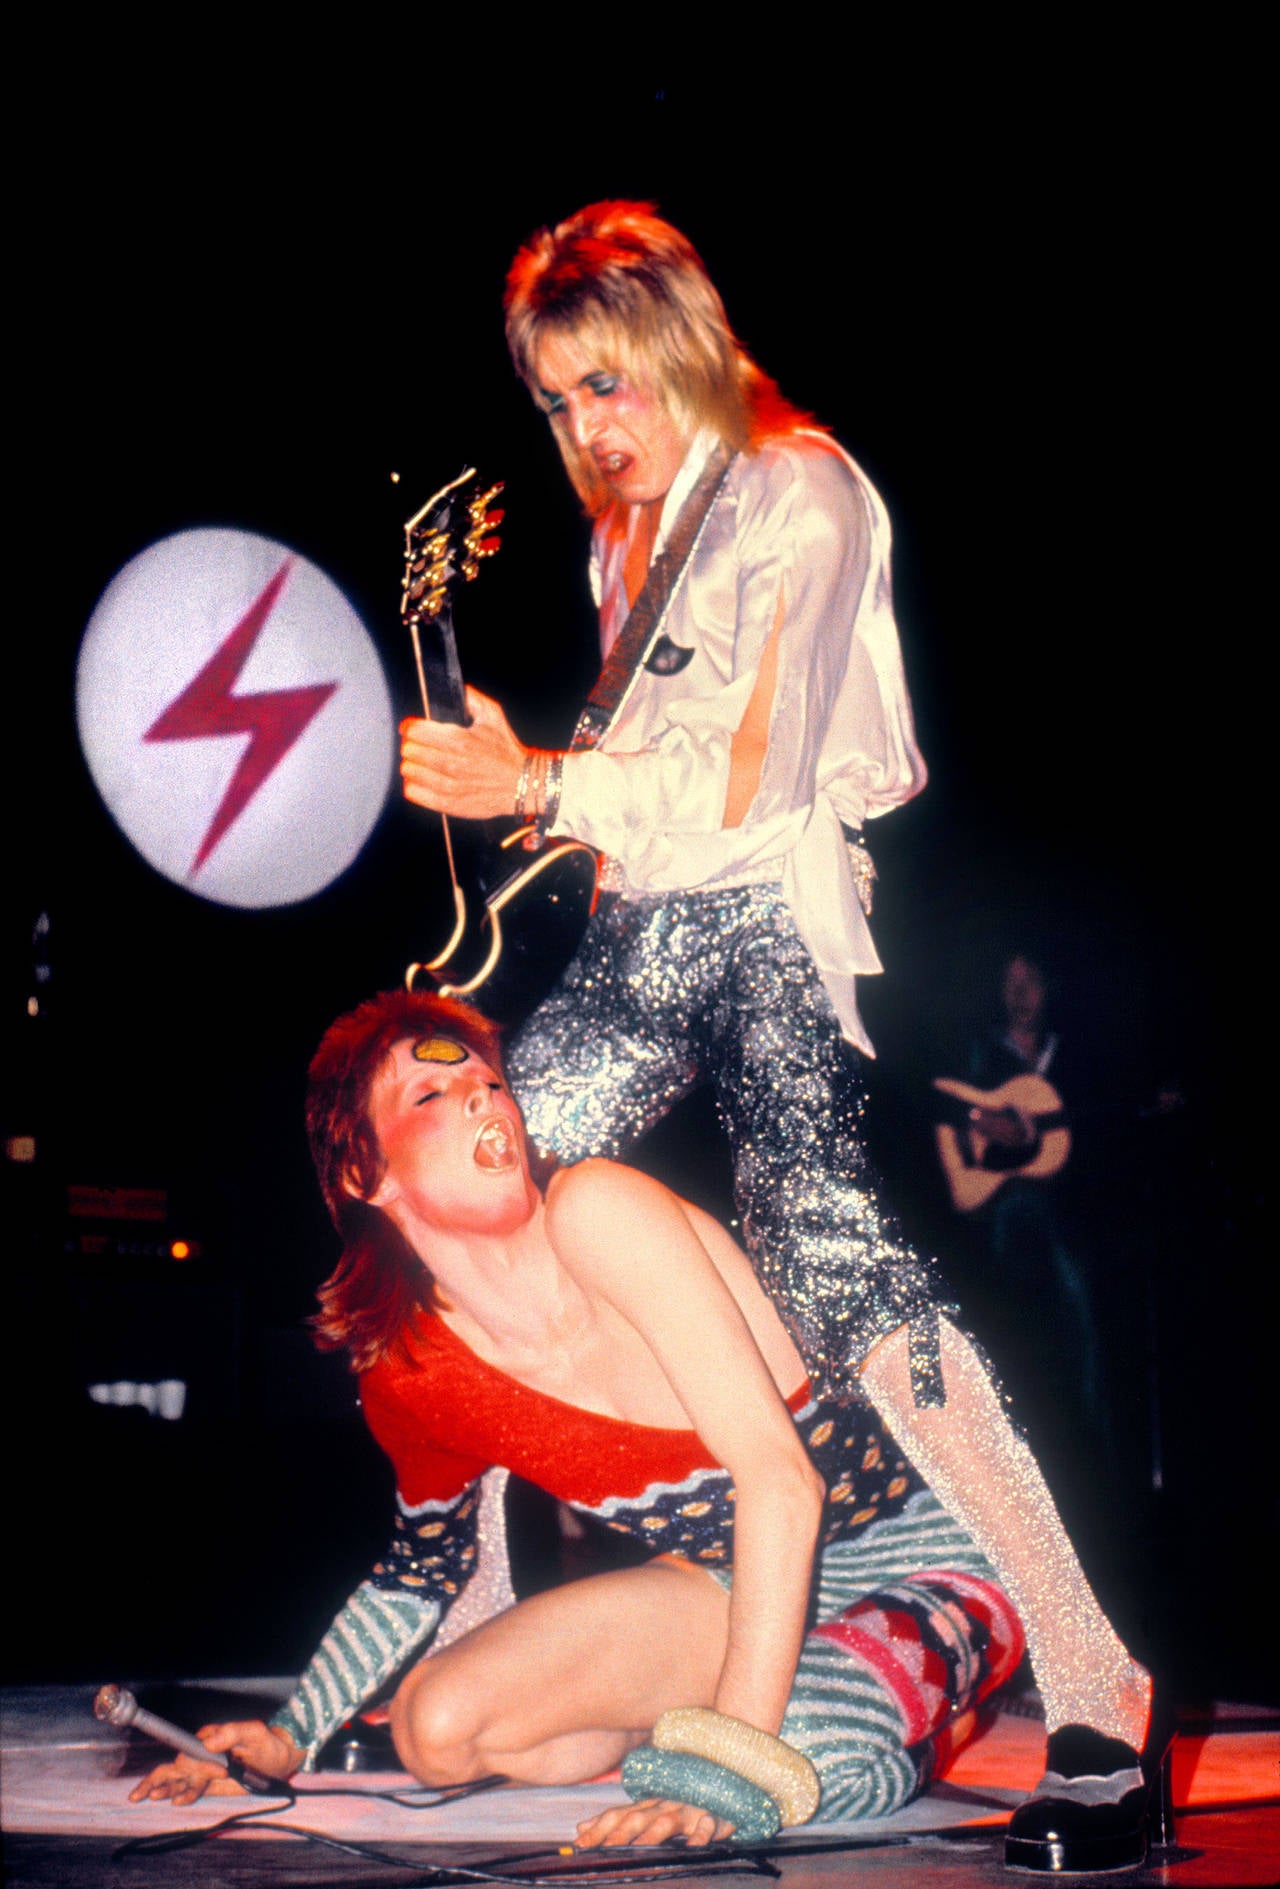 Mick Rock Color Photograph – Mick Ronson, David Bowie im Straddling-Stil, Farbfotografie, Kunstdruck